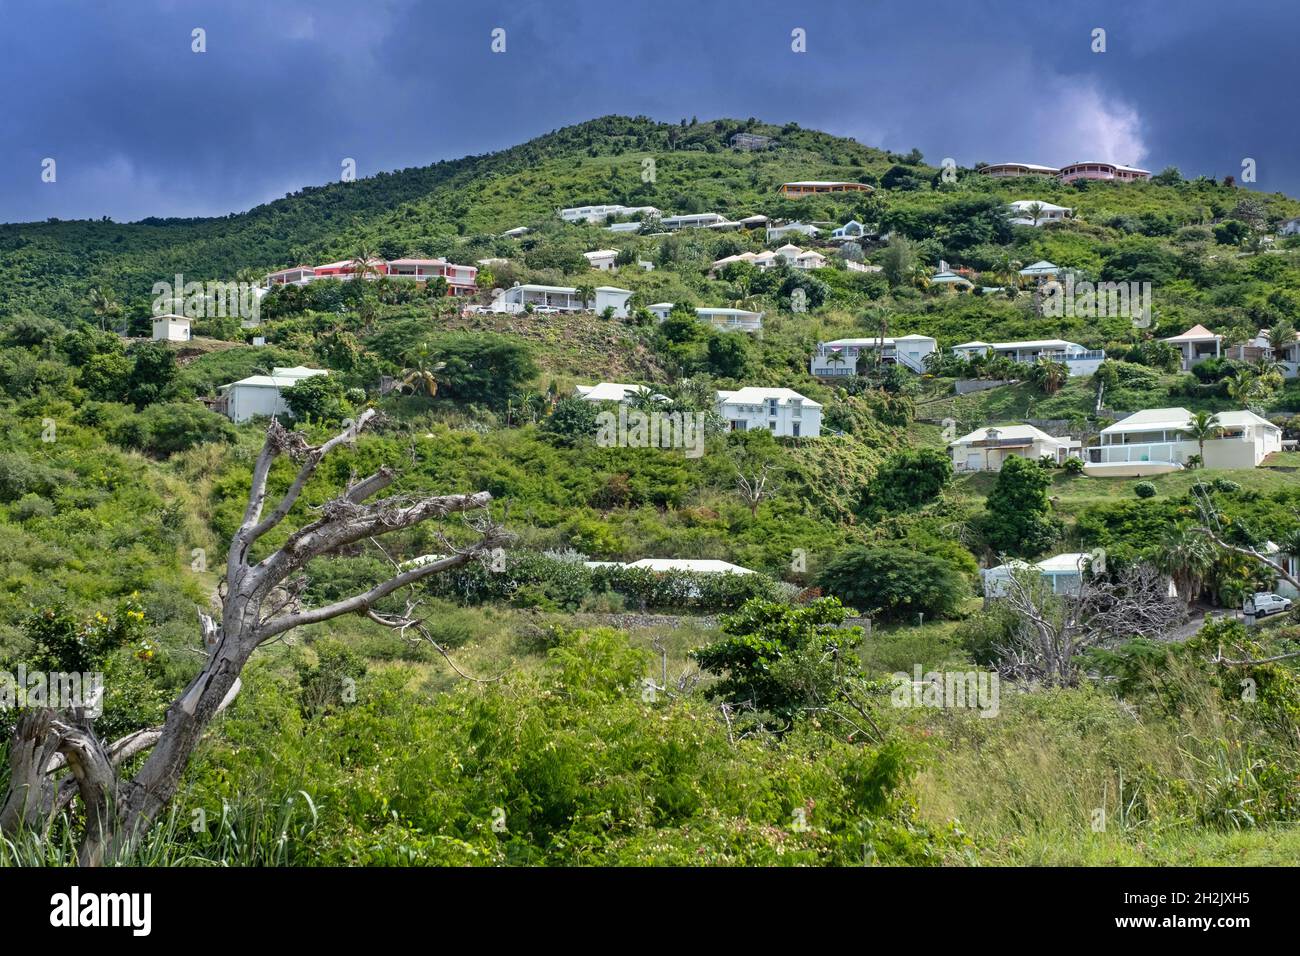 Threatening dark rain cloud over houses on hillside on the east side of the Dutch island part of Sint Maarten in the Caribbean Sea Stock Photo